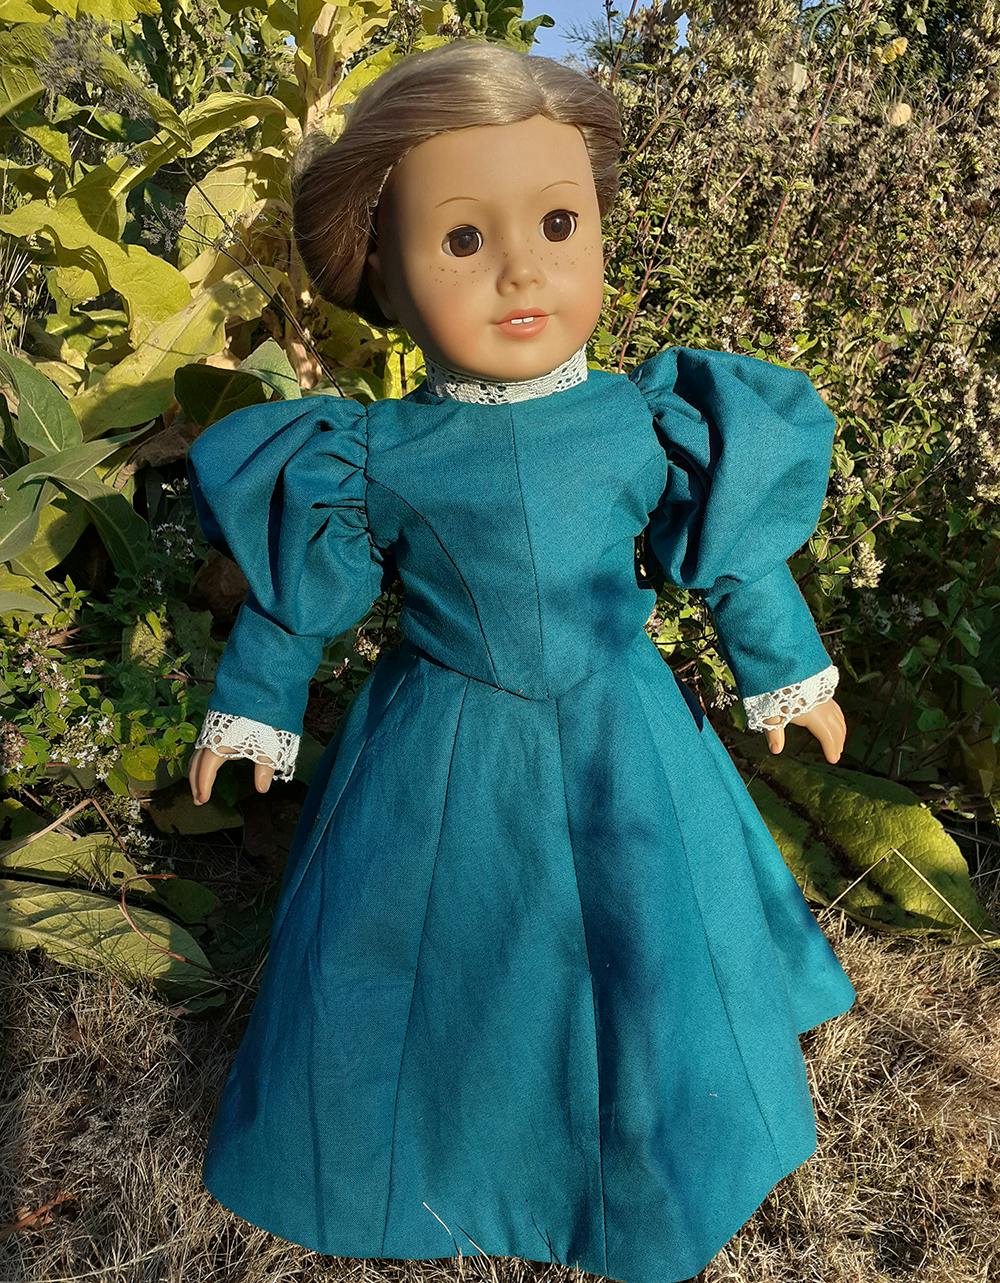 Rozzi made a vintage dolls dress